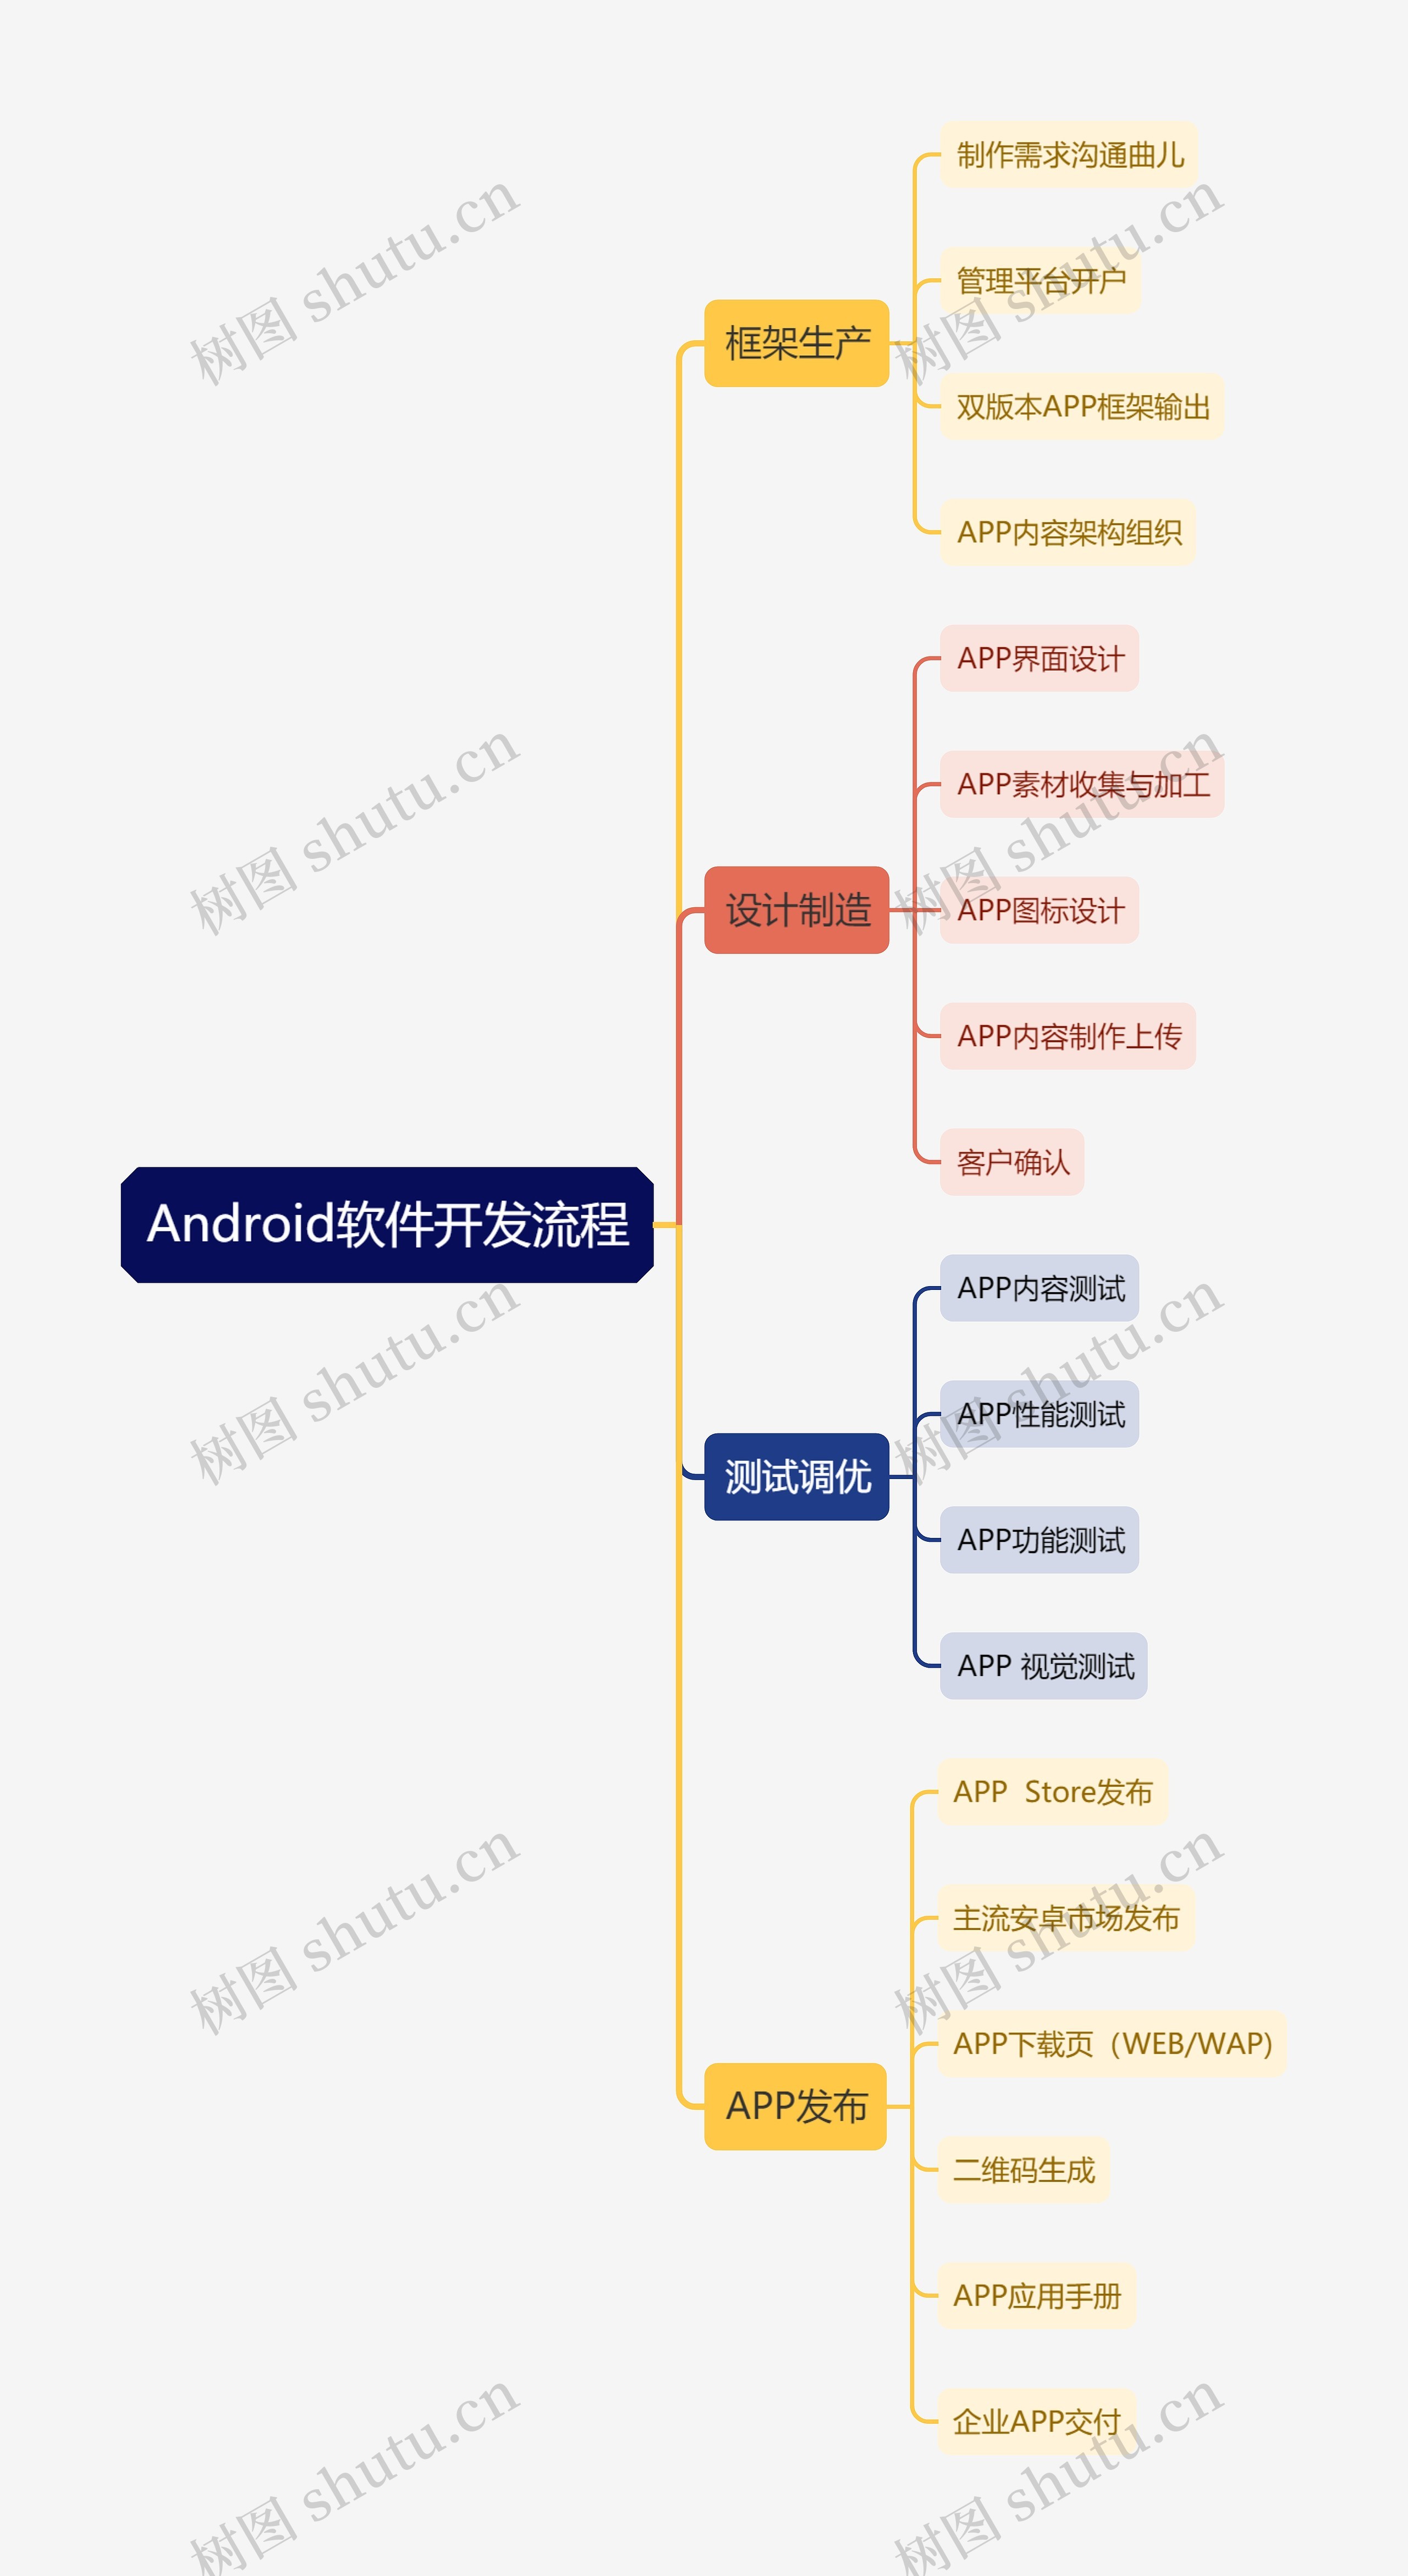 Android软件开发流程思维导图